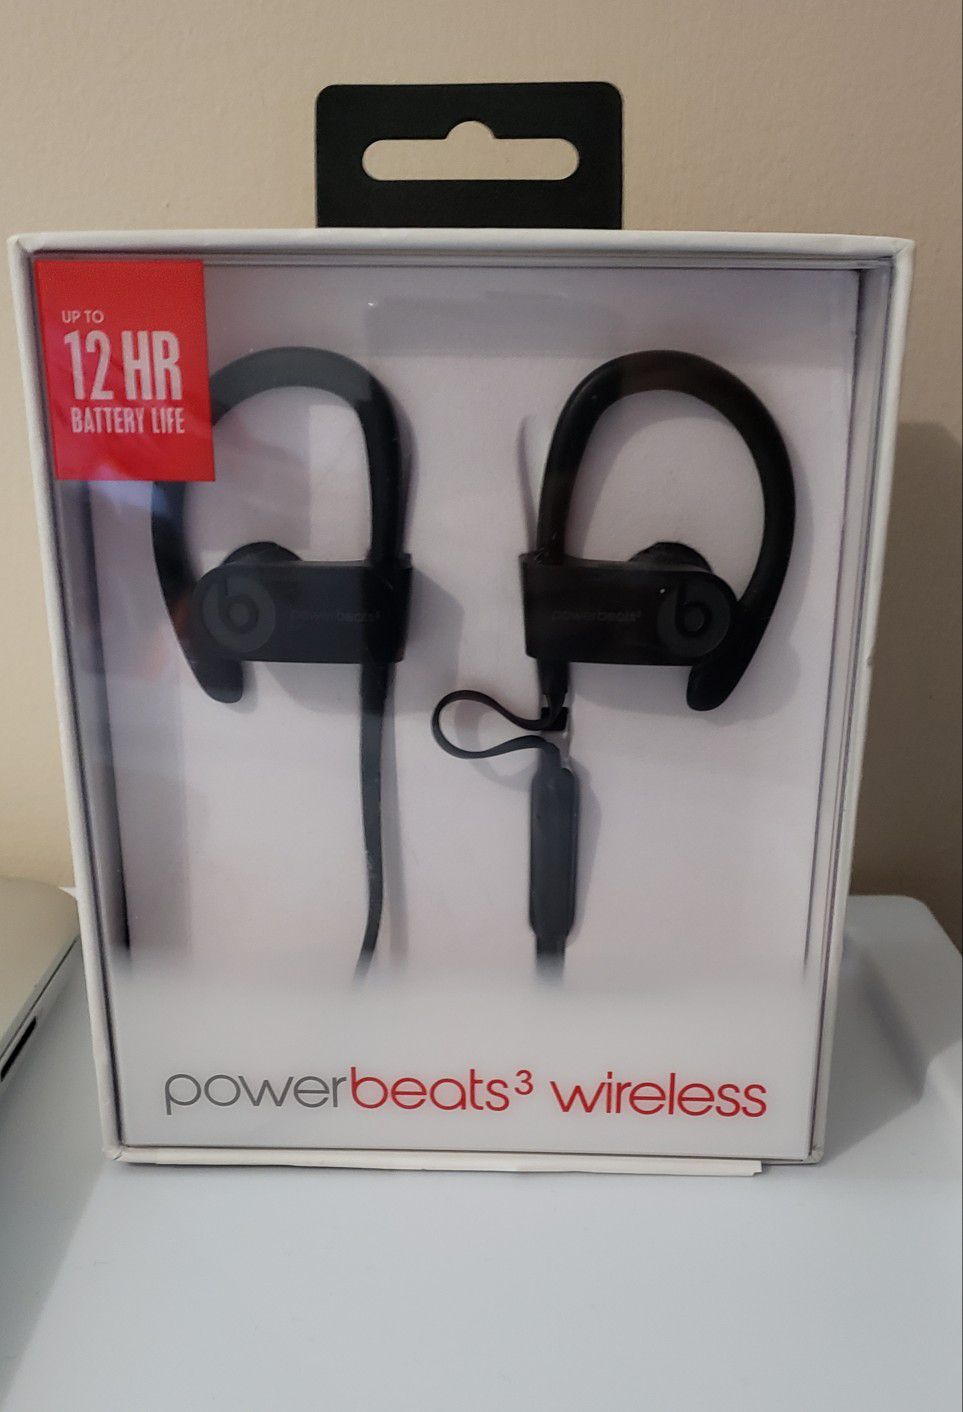 Powerbeats 3 Wireless earphones